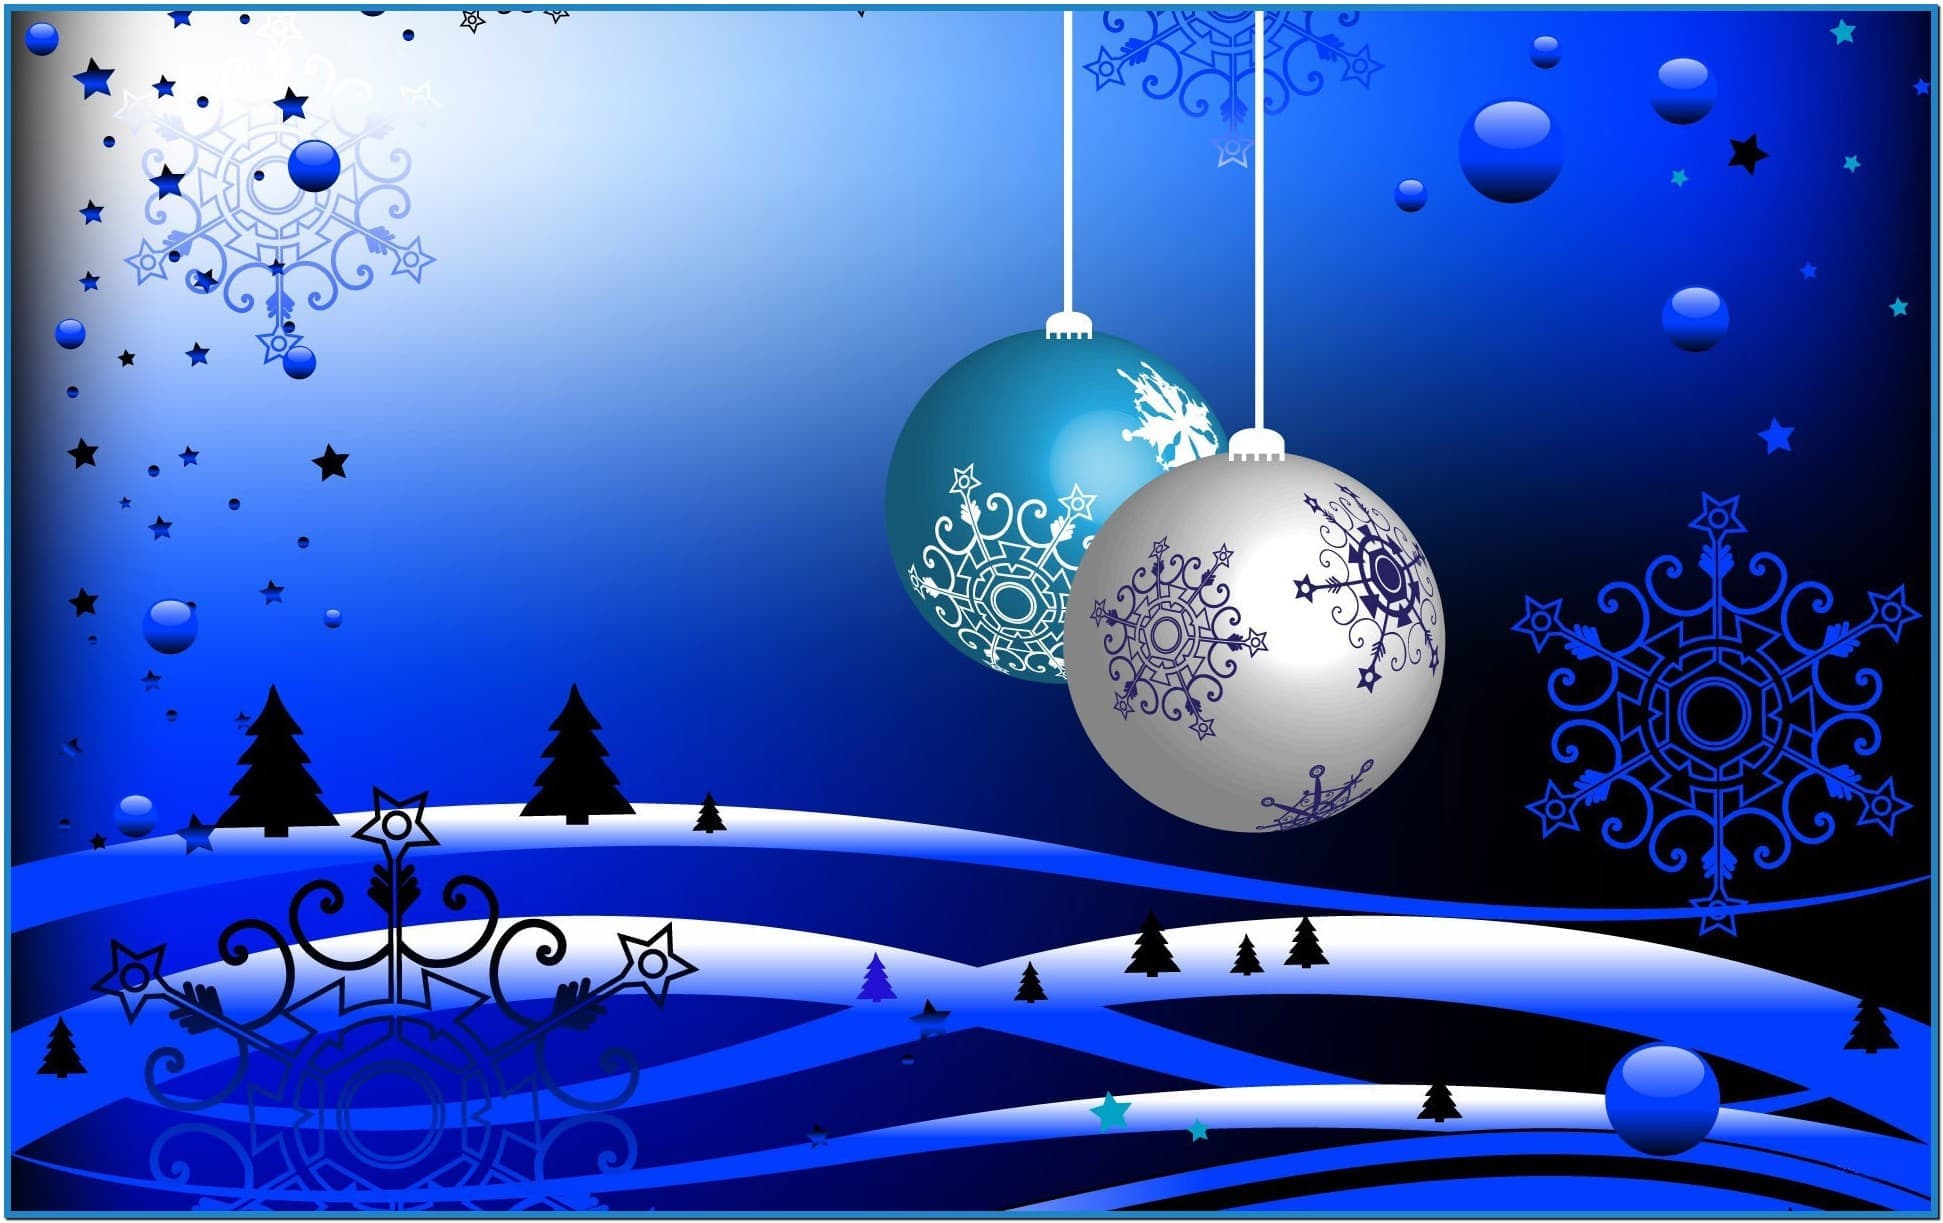 Christmas desktop backgrounds screensavers   Download free